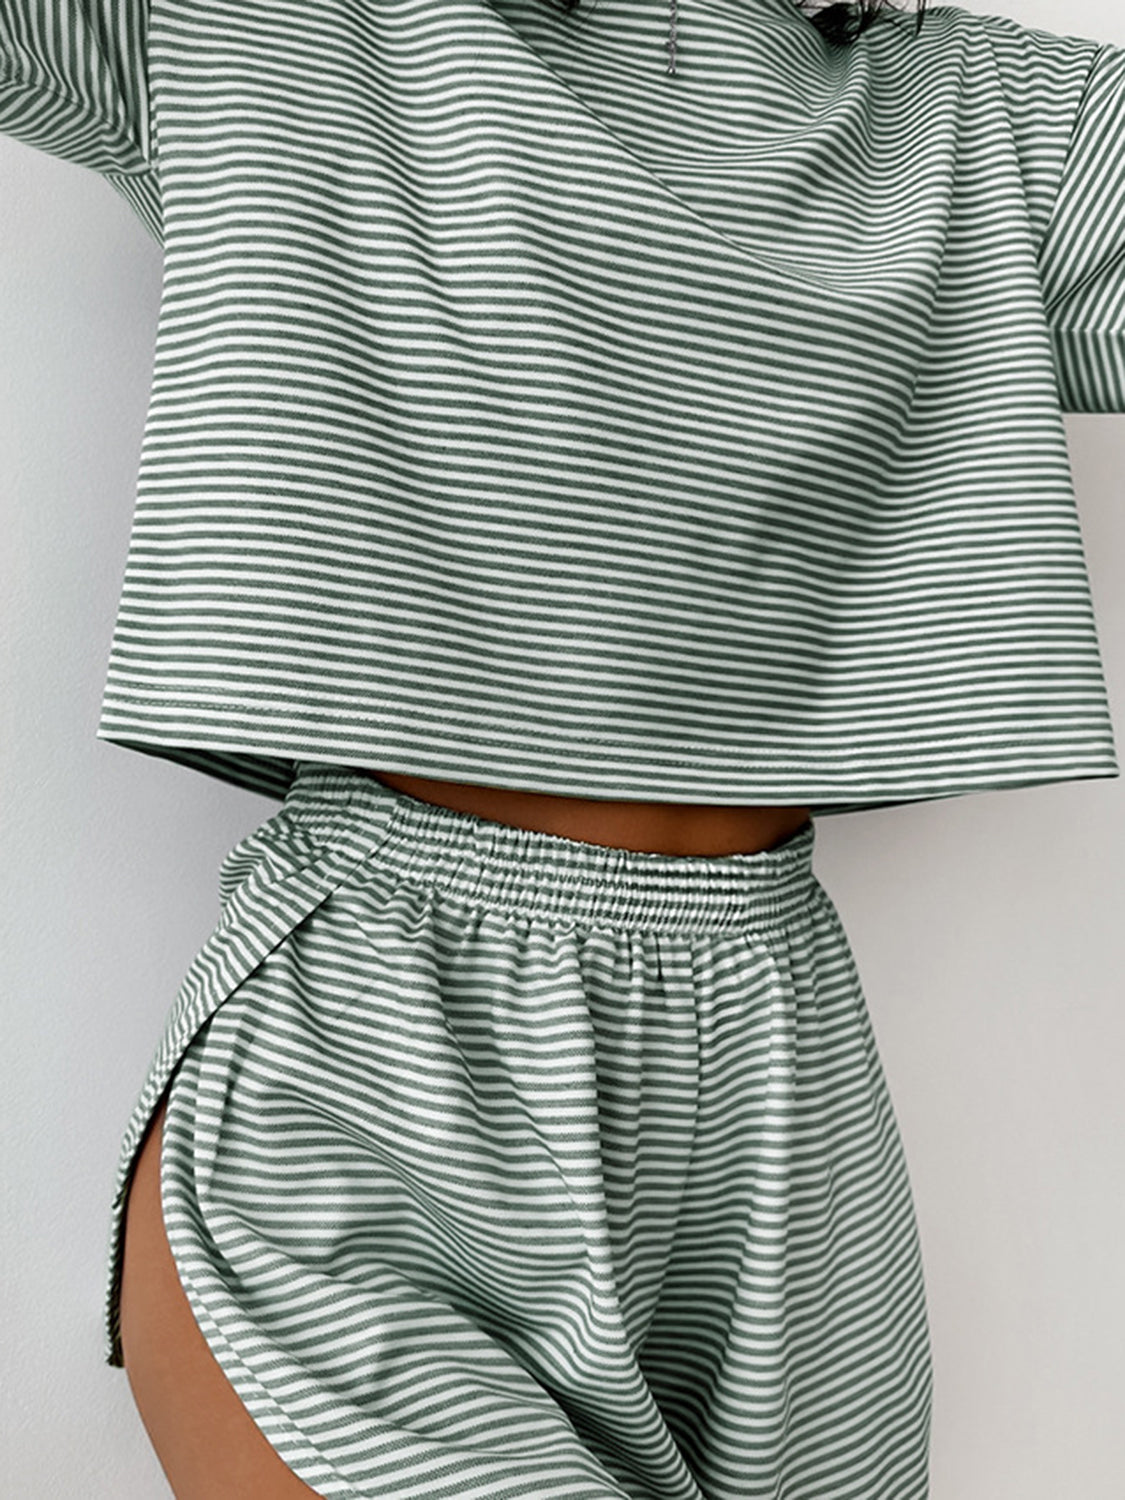 TEEK - Striped Round Neck Top and Shorts Set SET TEEK Trend Gum Leaf S 